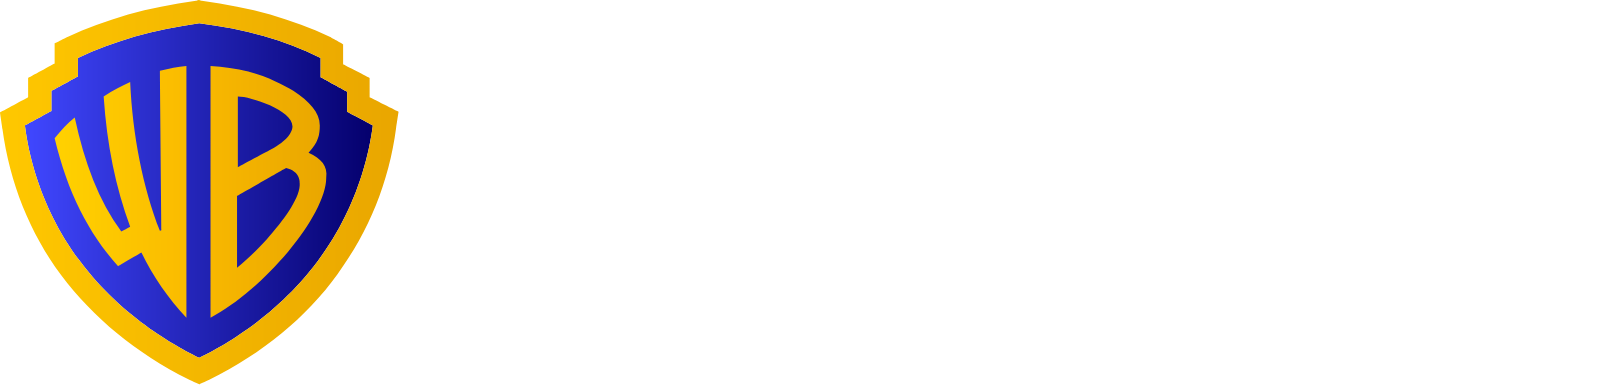 Warner Bros. Discovery Logo groß für dunkle Hintergründe (transparentes PNG)